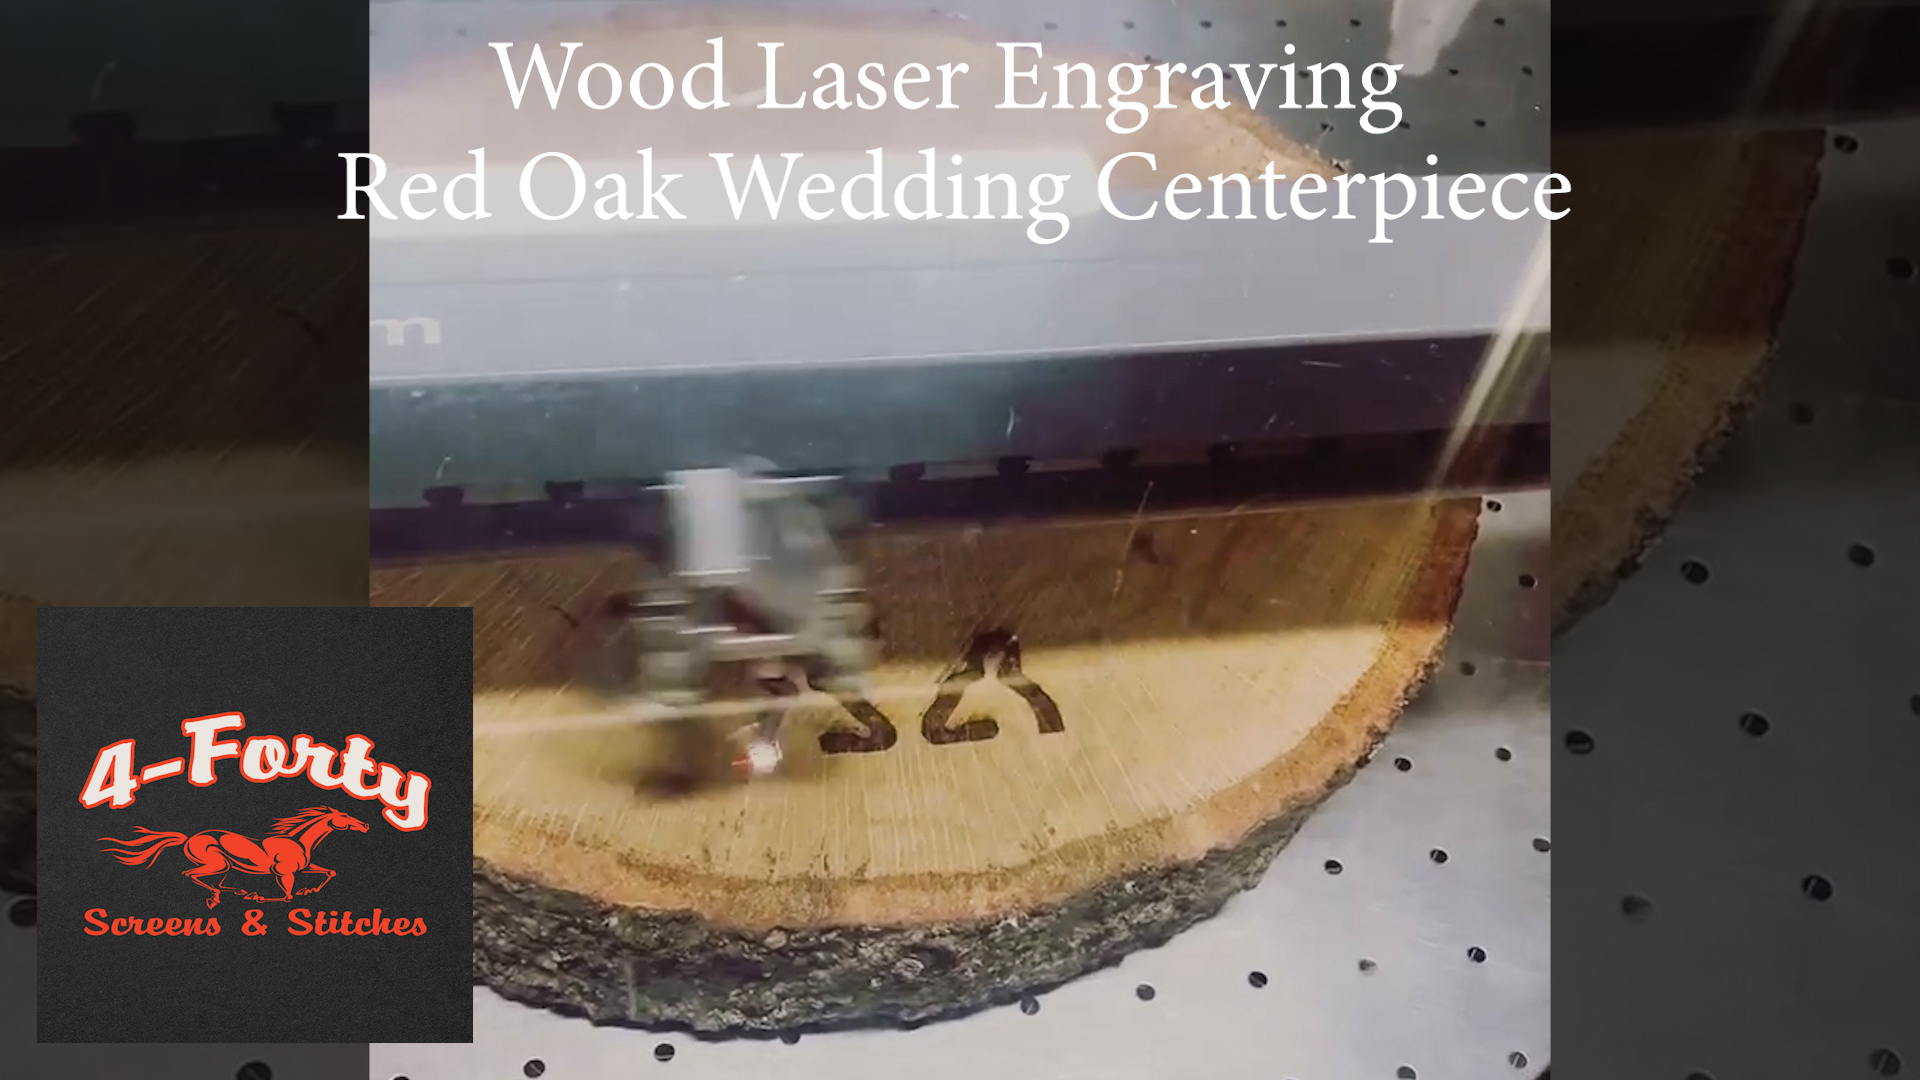 wood laser engraving - read oak wedding centerpiece